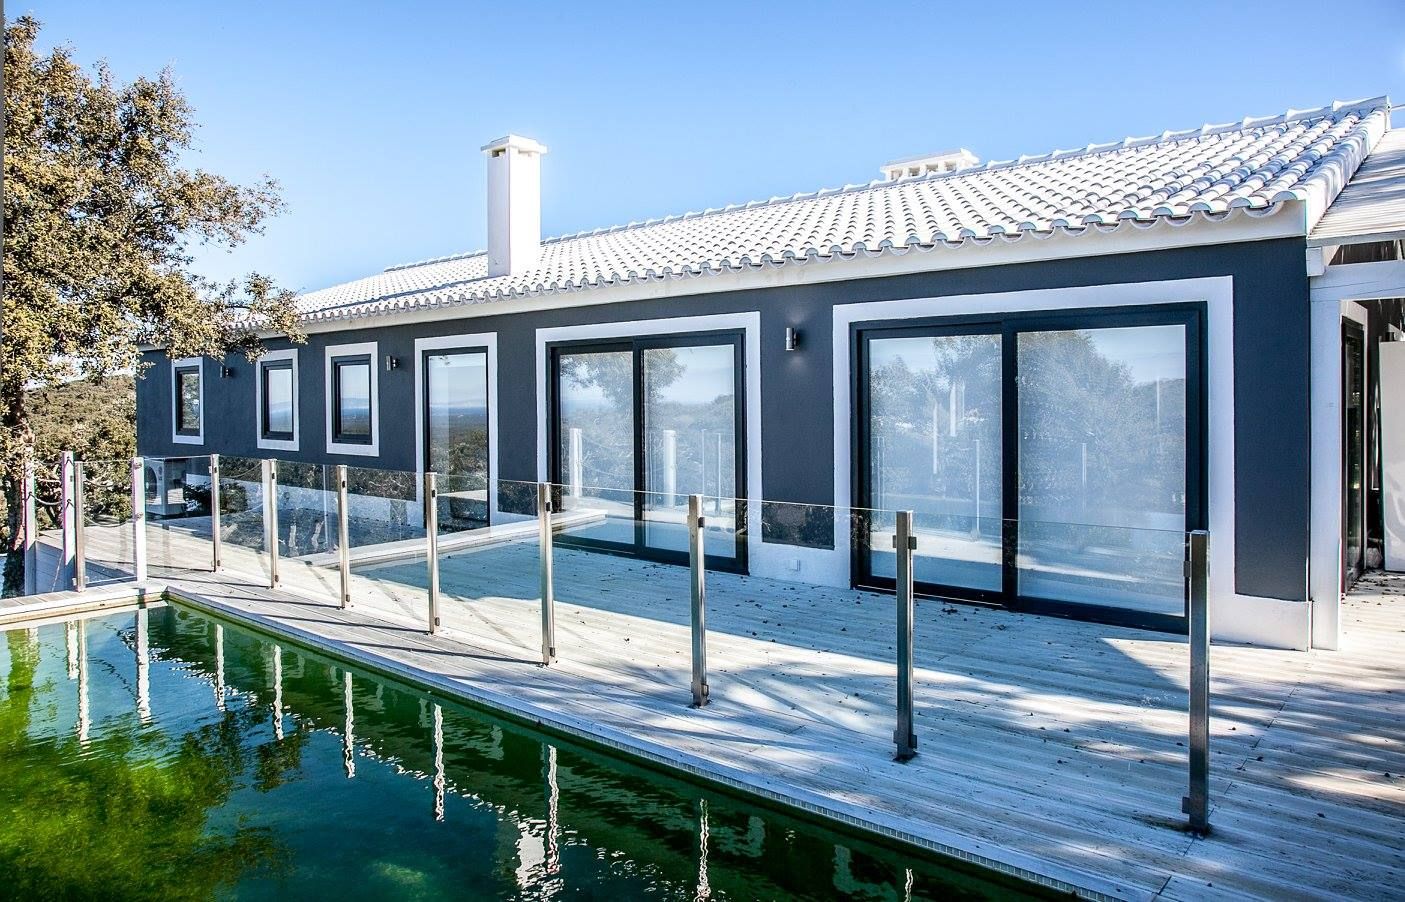 Lounge CB|arq Casas mediterrânicas Tijolo piscina praia campo casa madeira deck decapé rustico moderno minimalista jardim